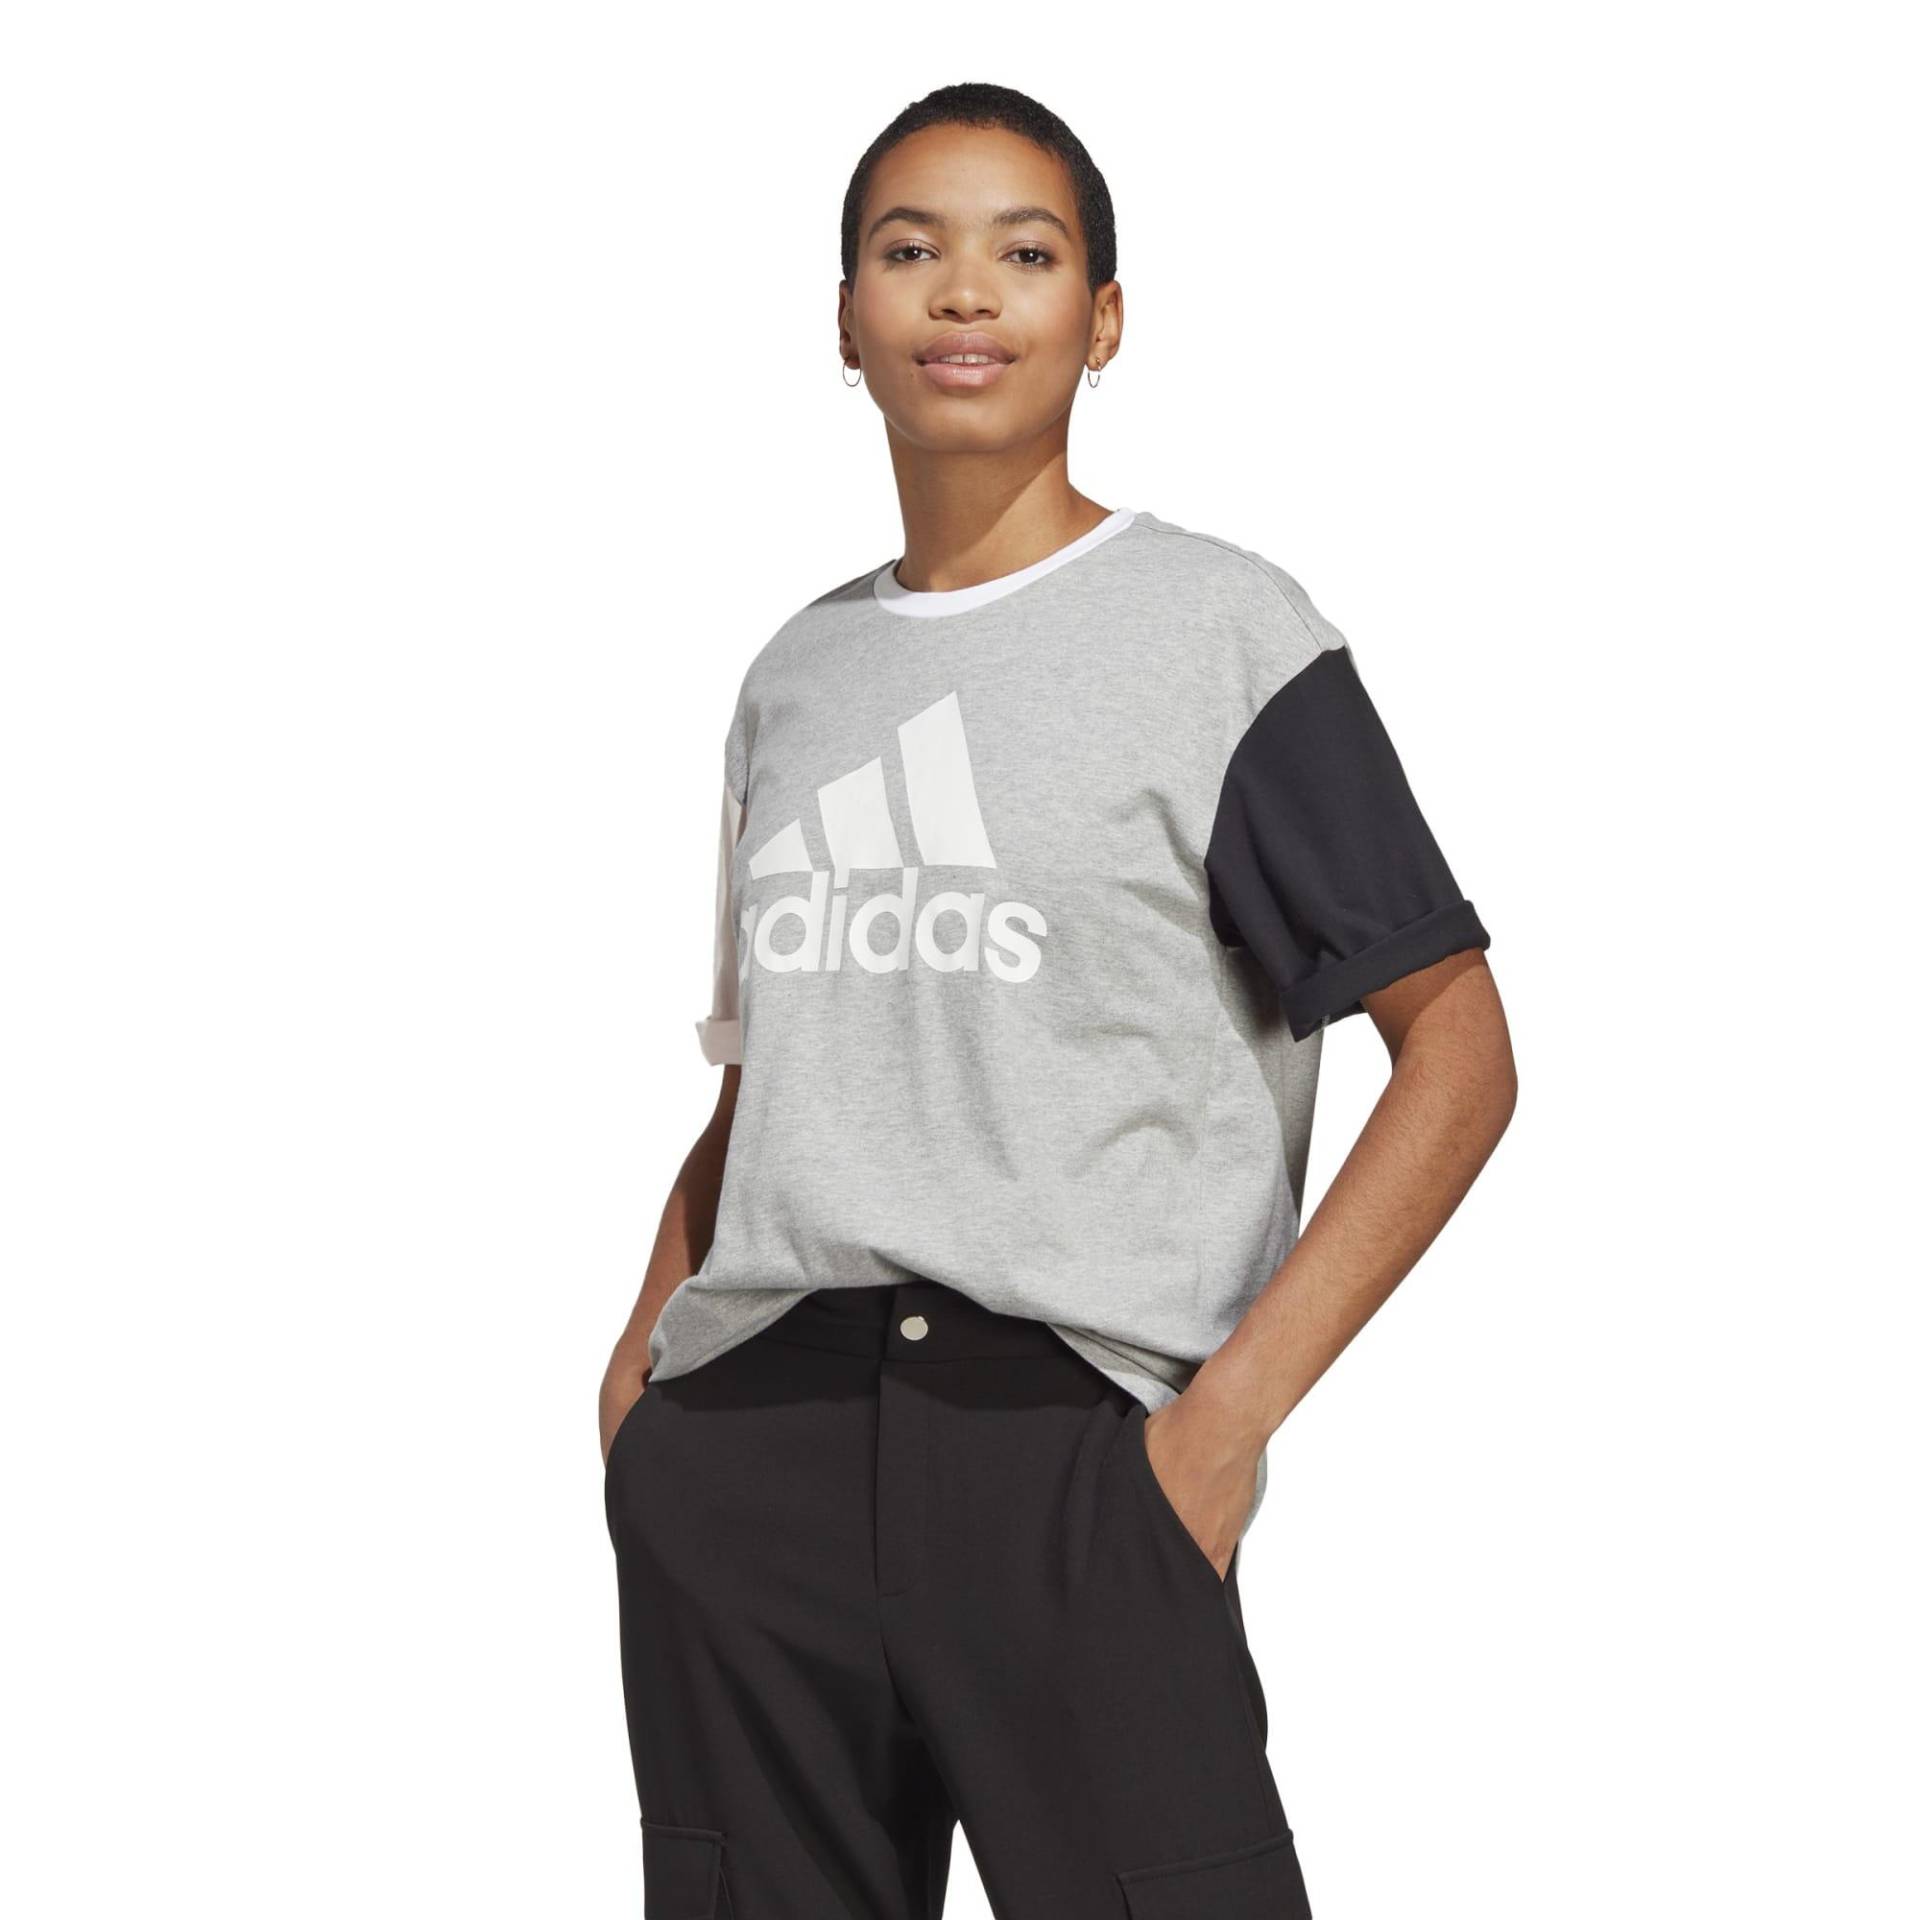 Adidas T-Shirt Damen - Colorblock grau von Adidas